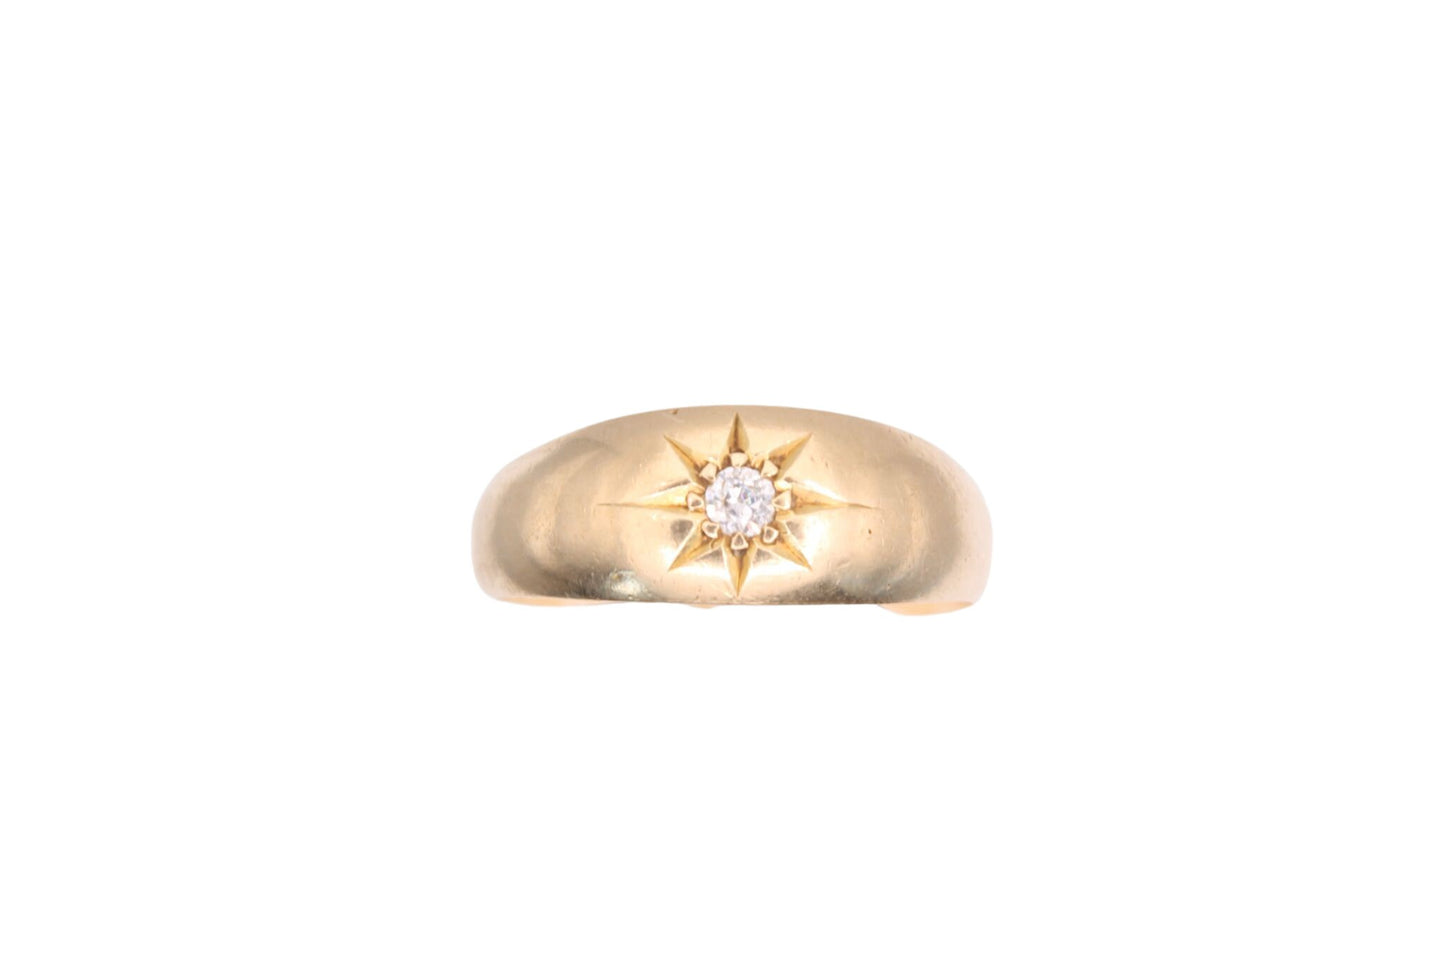 Antique Edwardian 18ct Gold & Diamond Gypsy Ring - 1908